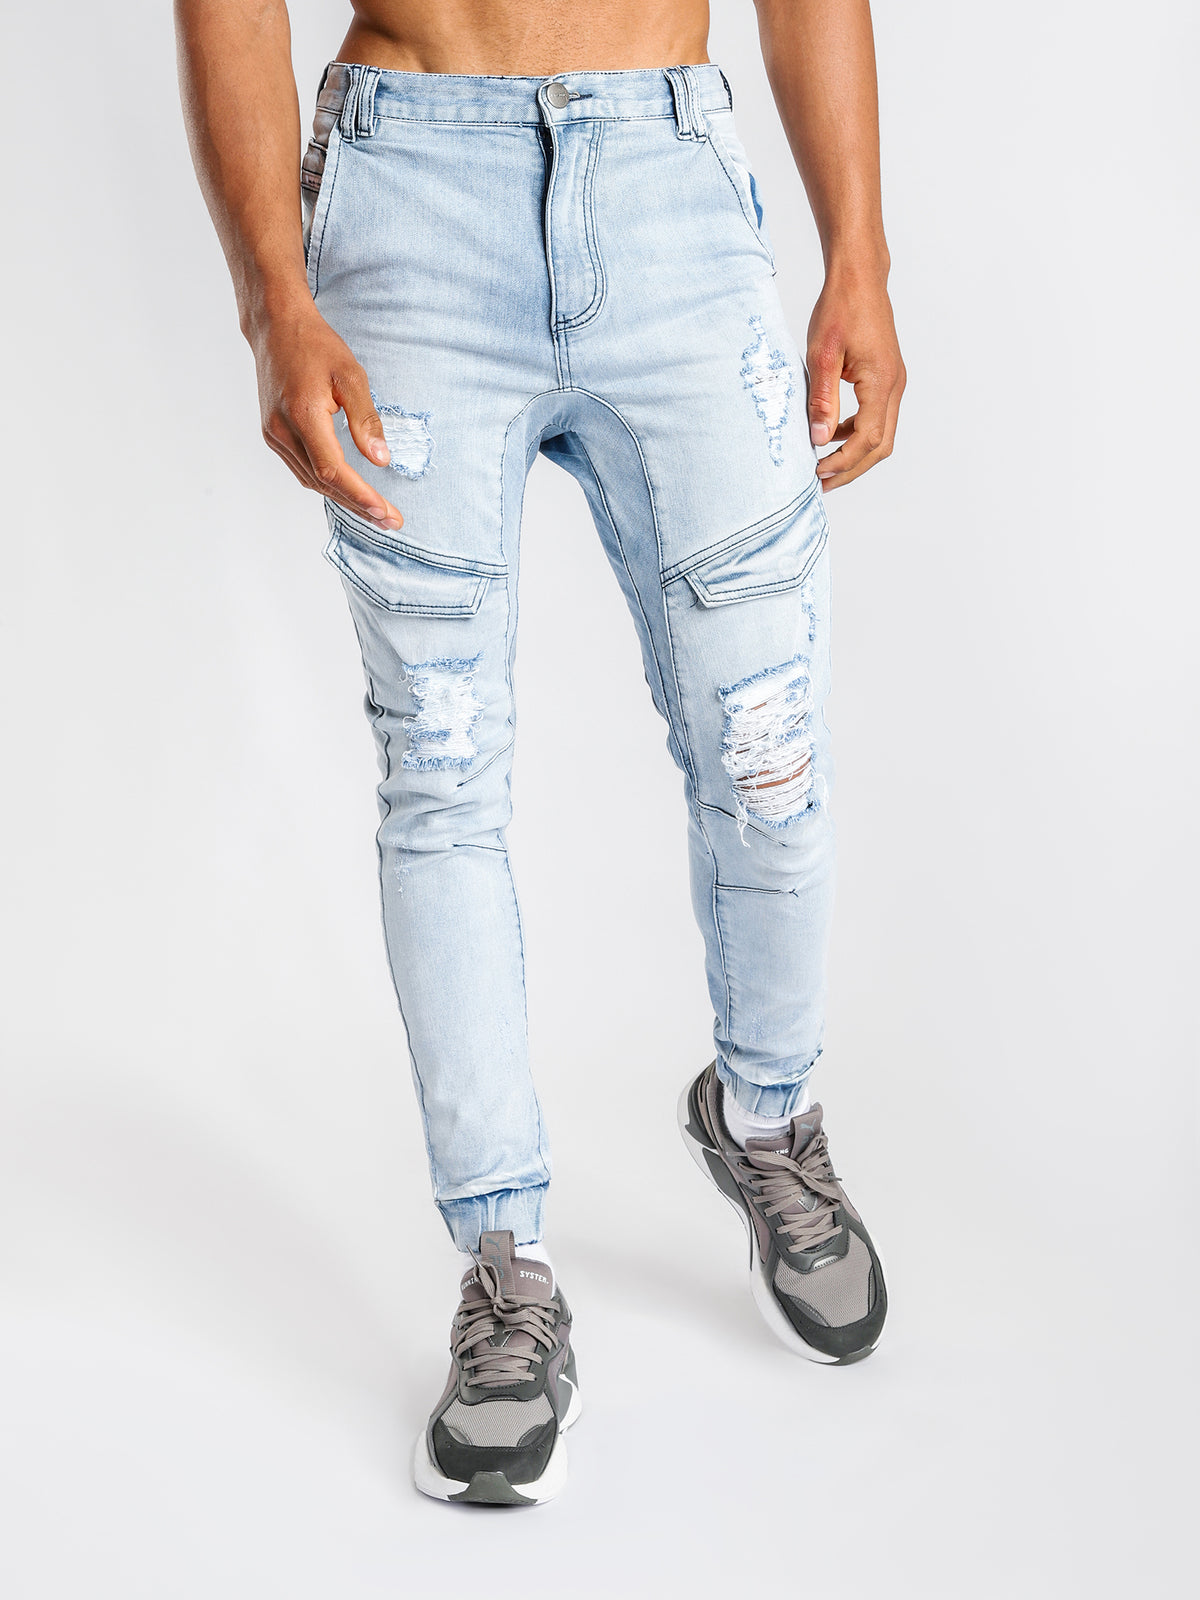 Flight Engineered Jeans in Broken Bleach Denim